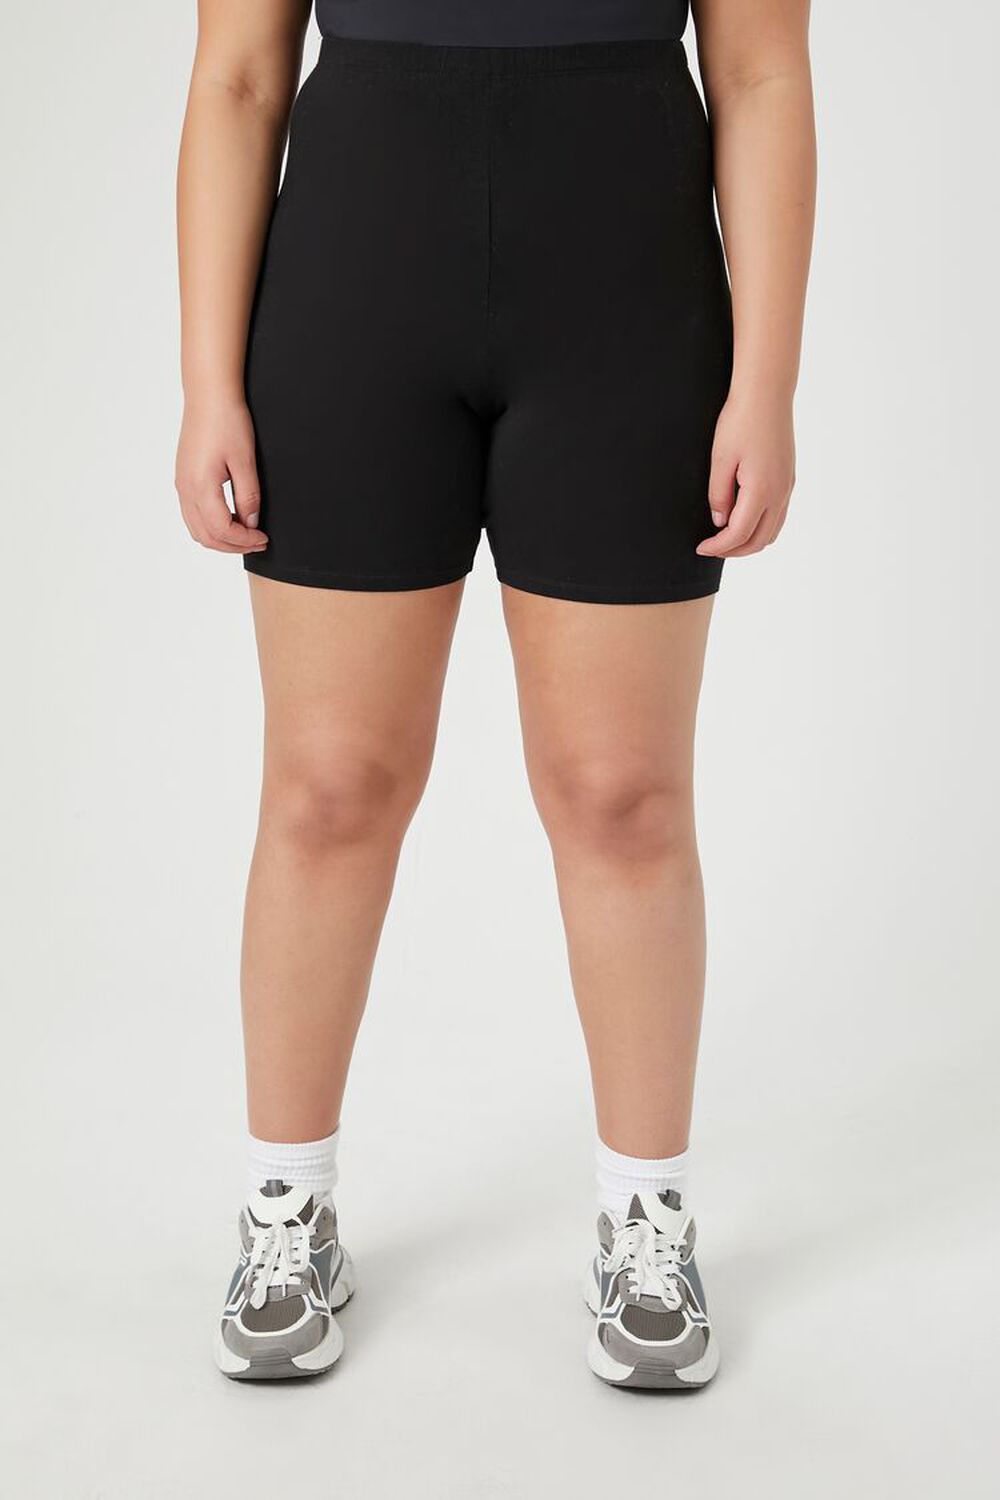 BLACK Plus Size Organically Grown Cotton Biker Shorts, image 2